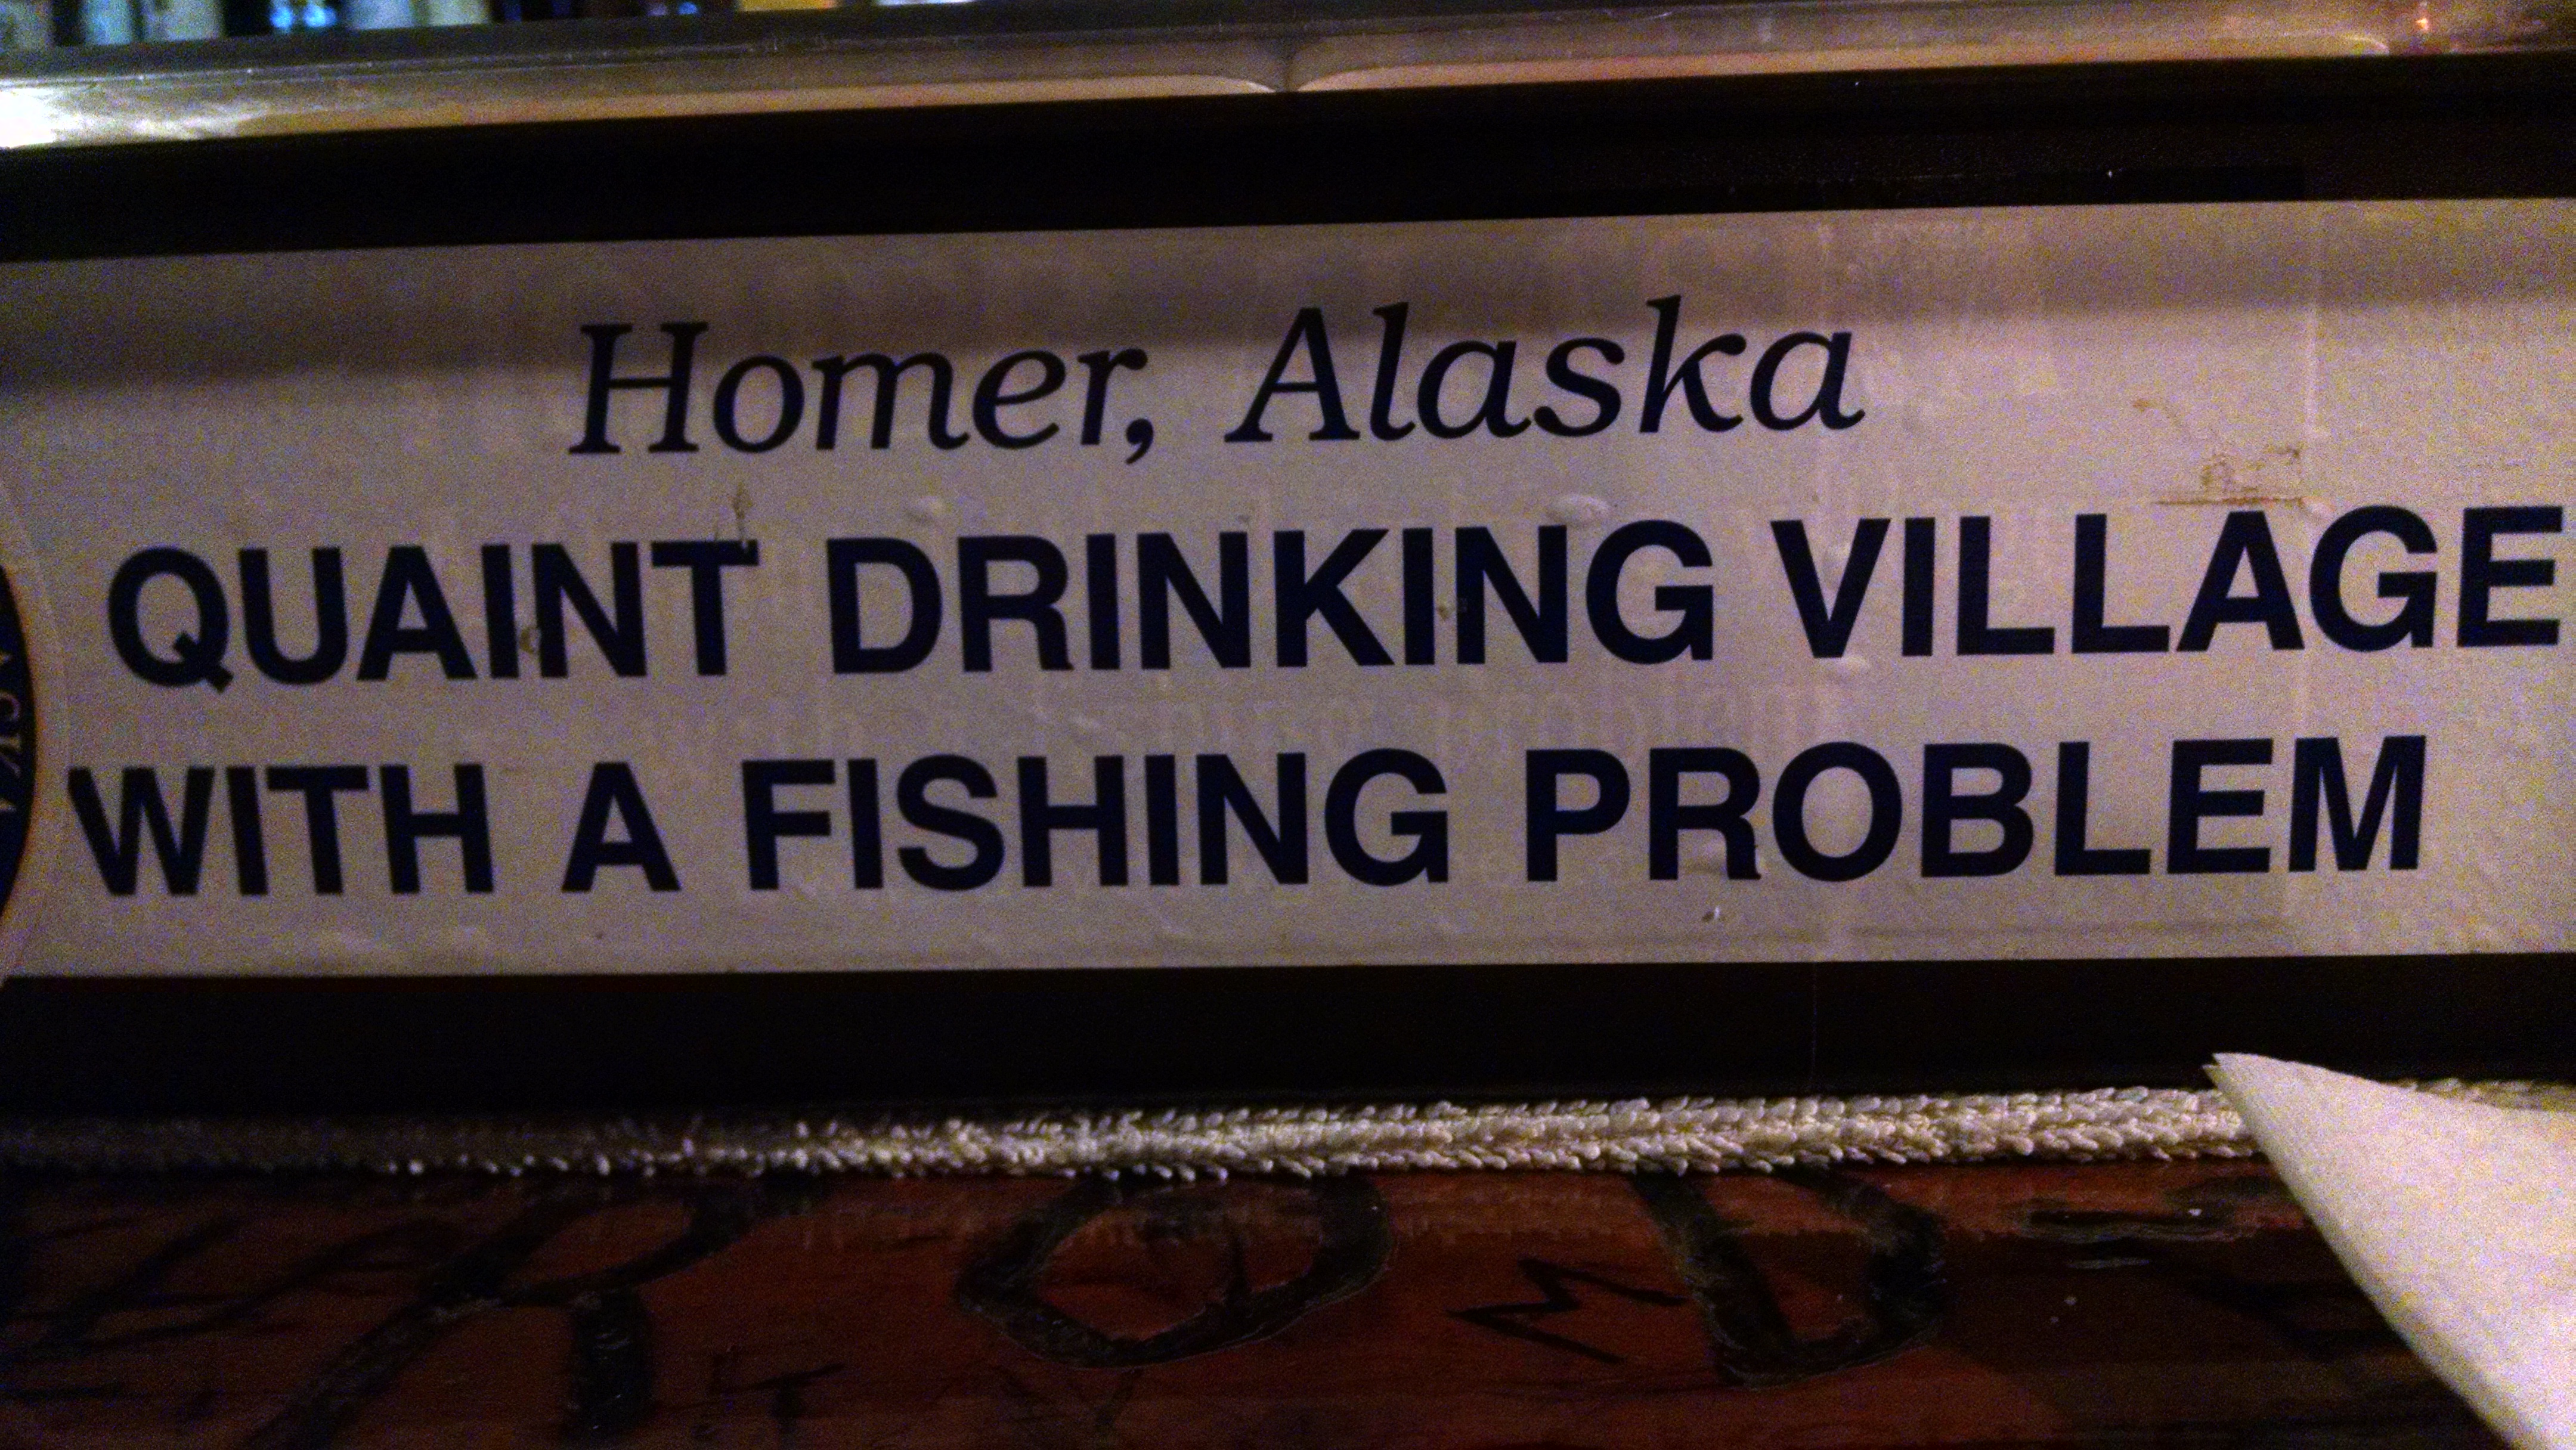 Home Alaska bar sign